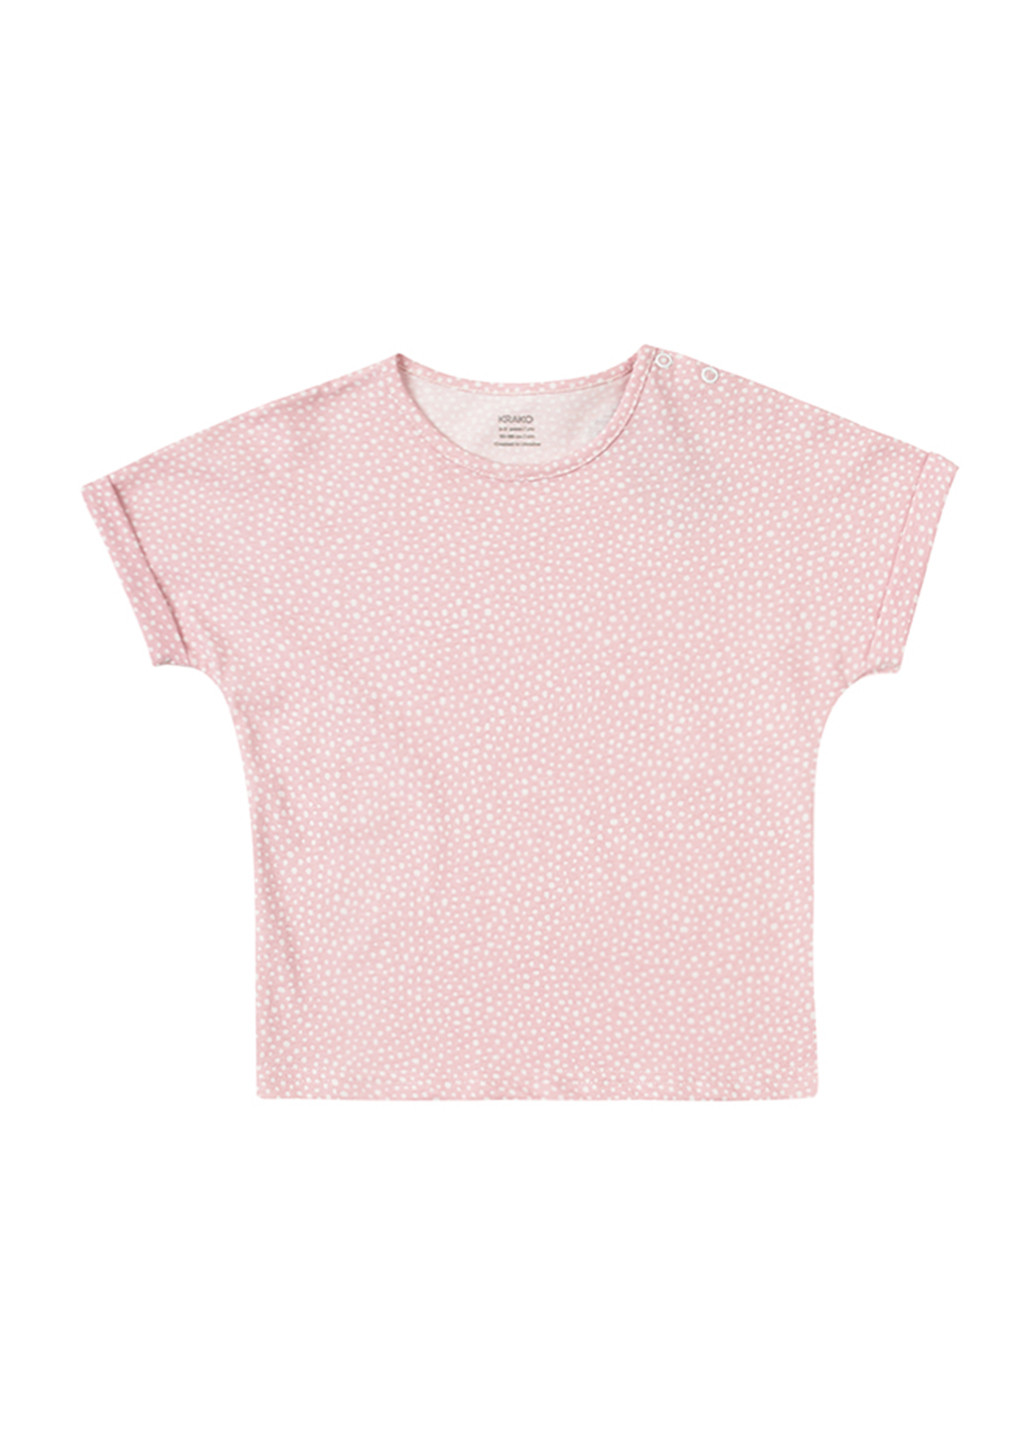 Розовая летняя футболка розовая "капельки" KRAKO